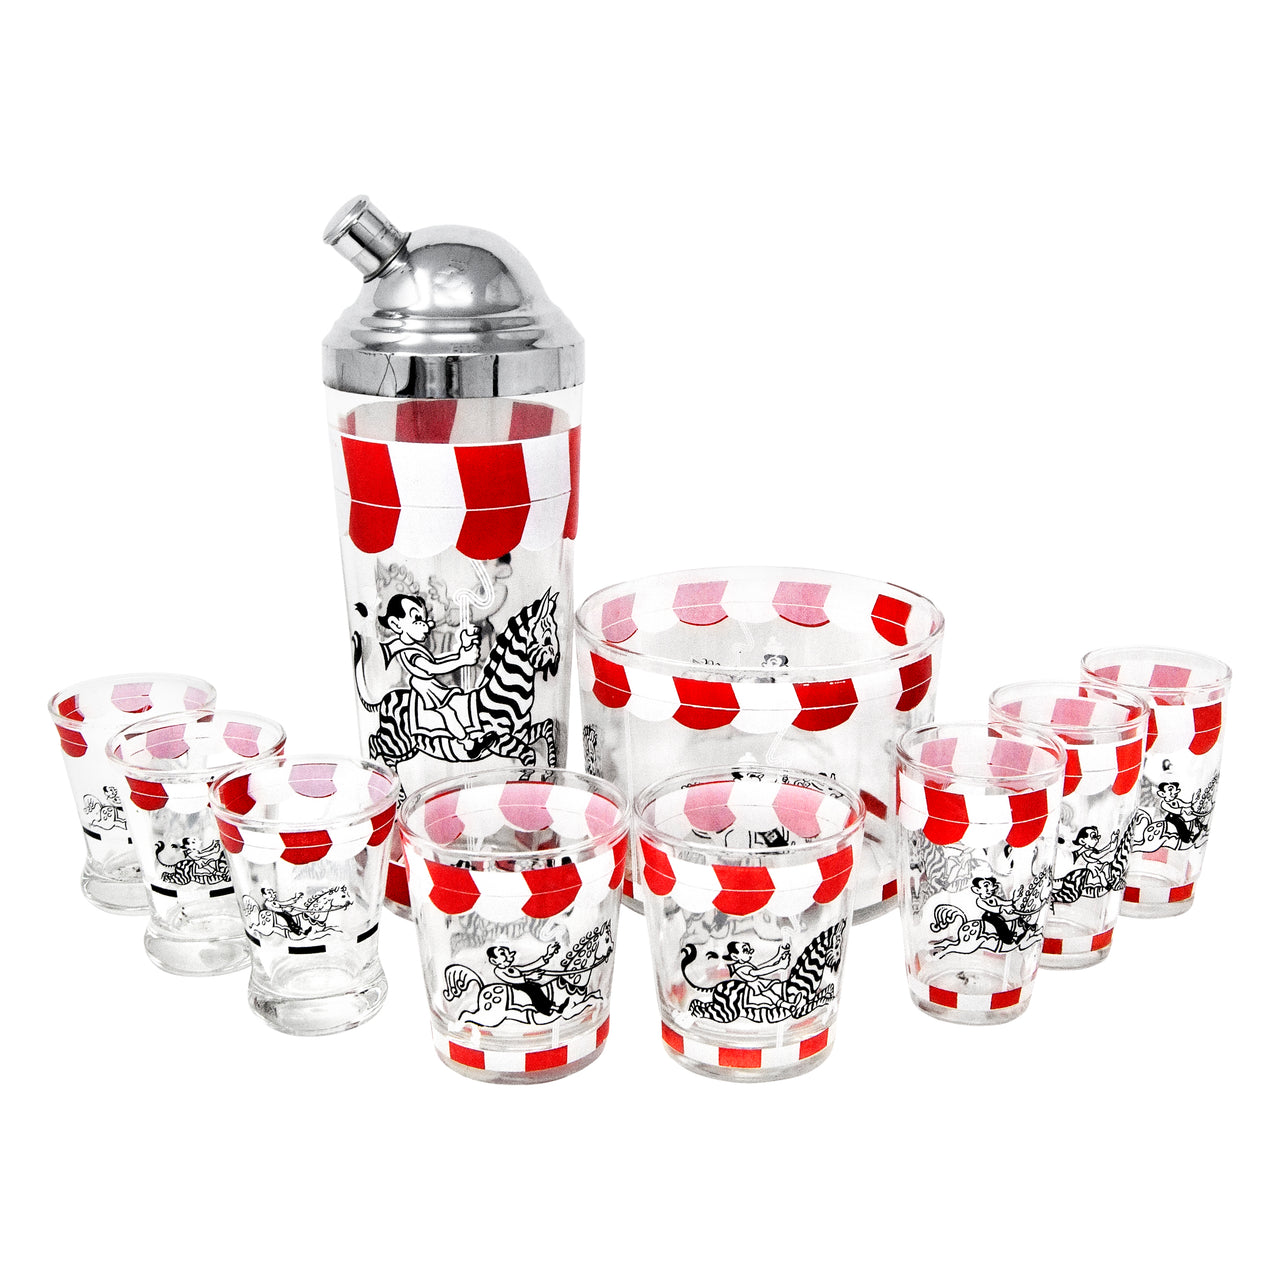 Vintage Red, White & Black Carousel Cocktail Shaker Set | The Hour Shop